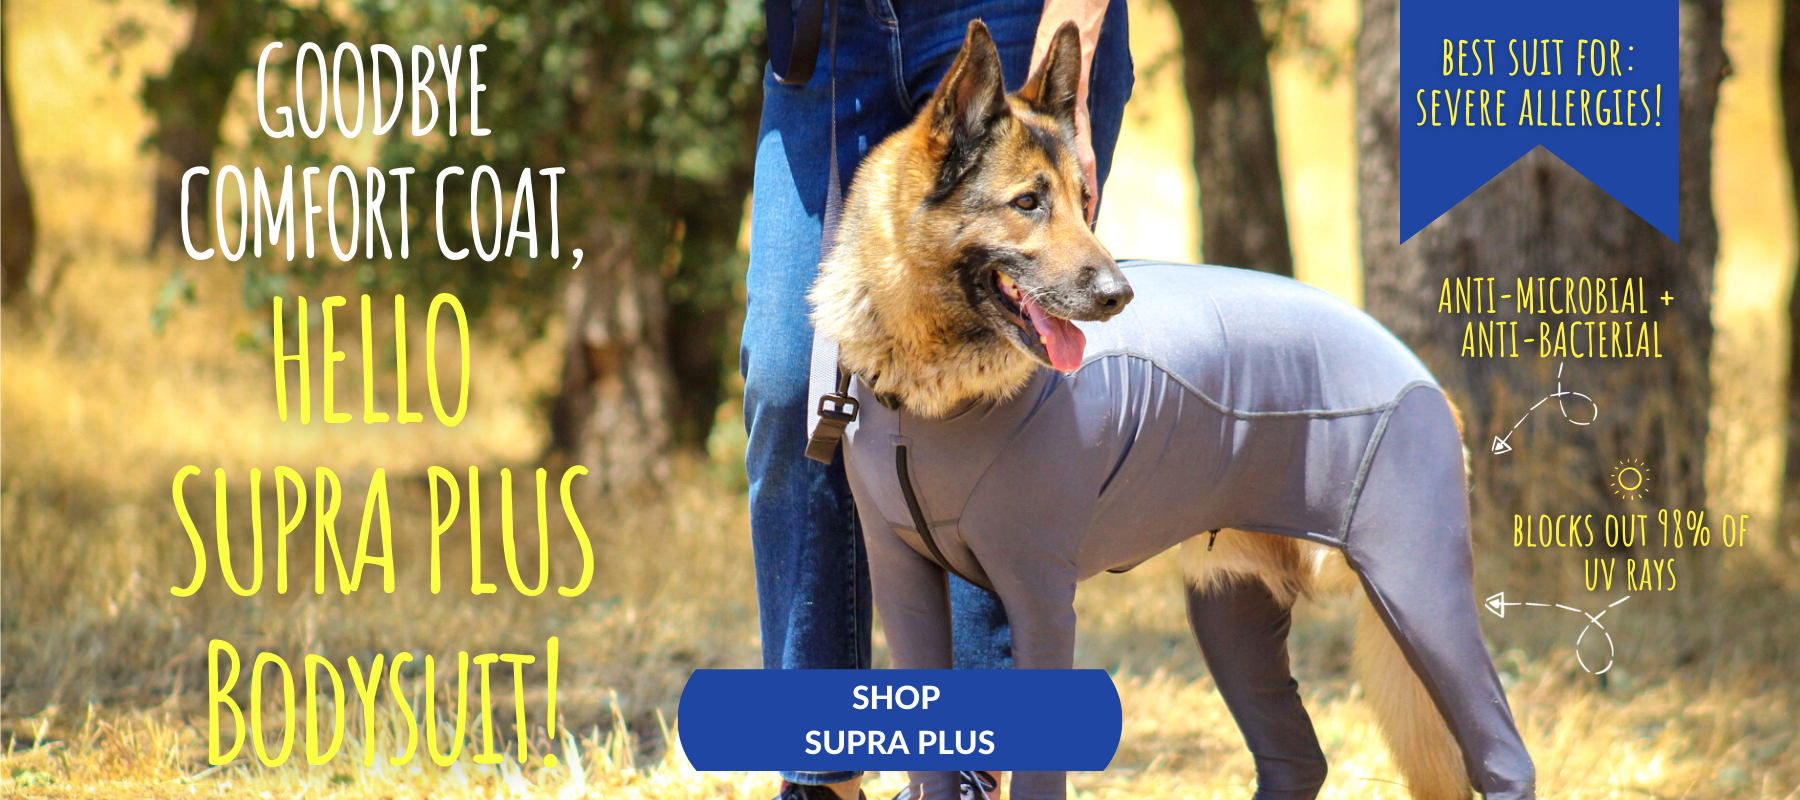 German Shepherd in Supra Plus Bodysuit to Prevent Ticks, Prevent Allergies and More